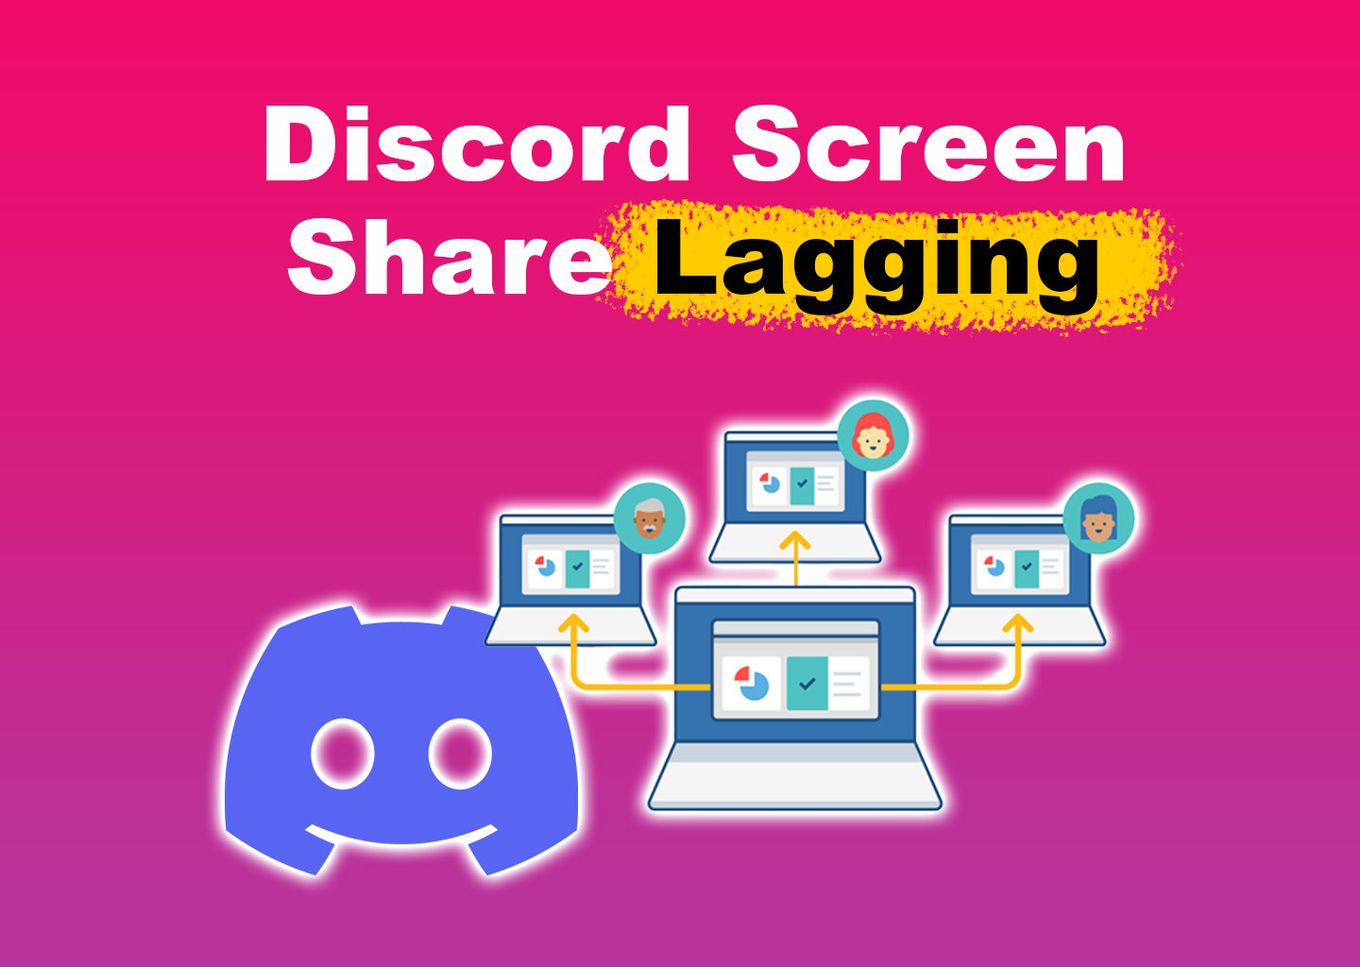 Discord Screen Share Lagging